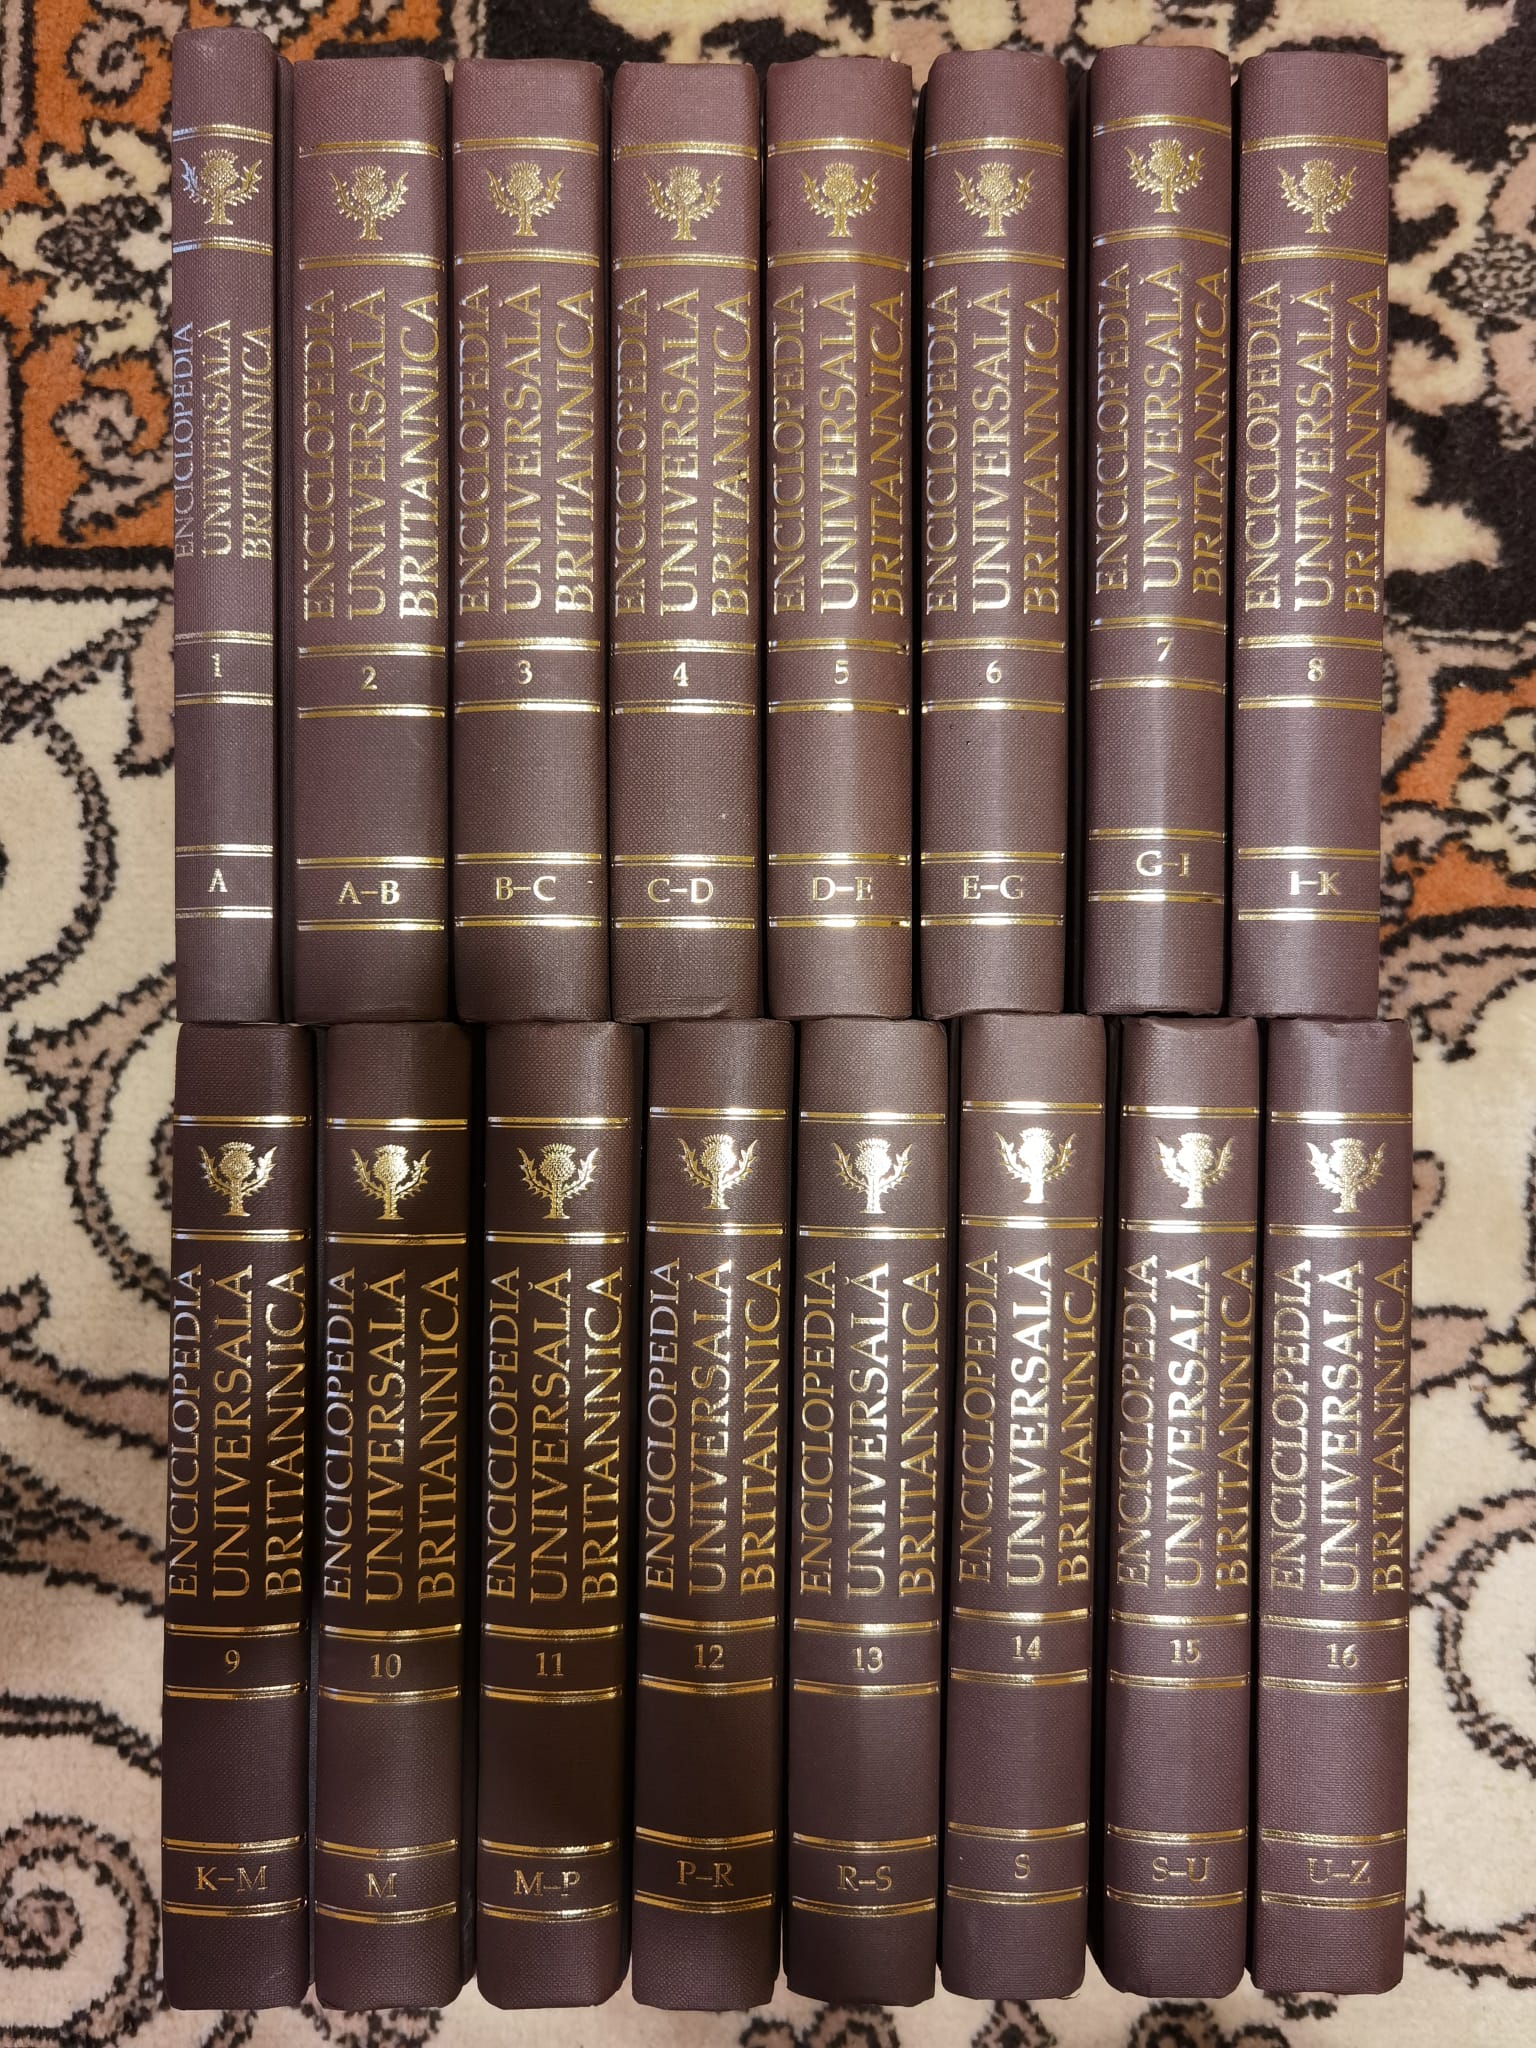 enciclopedia universala britanica vol 1-16 serie completa                                            a capella - agusin                                                                                  